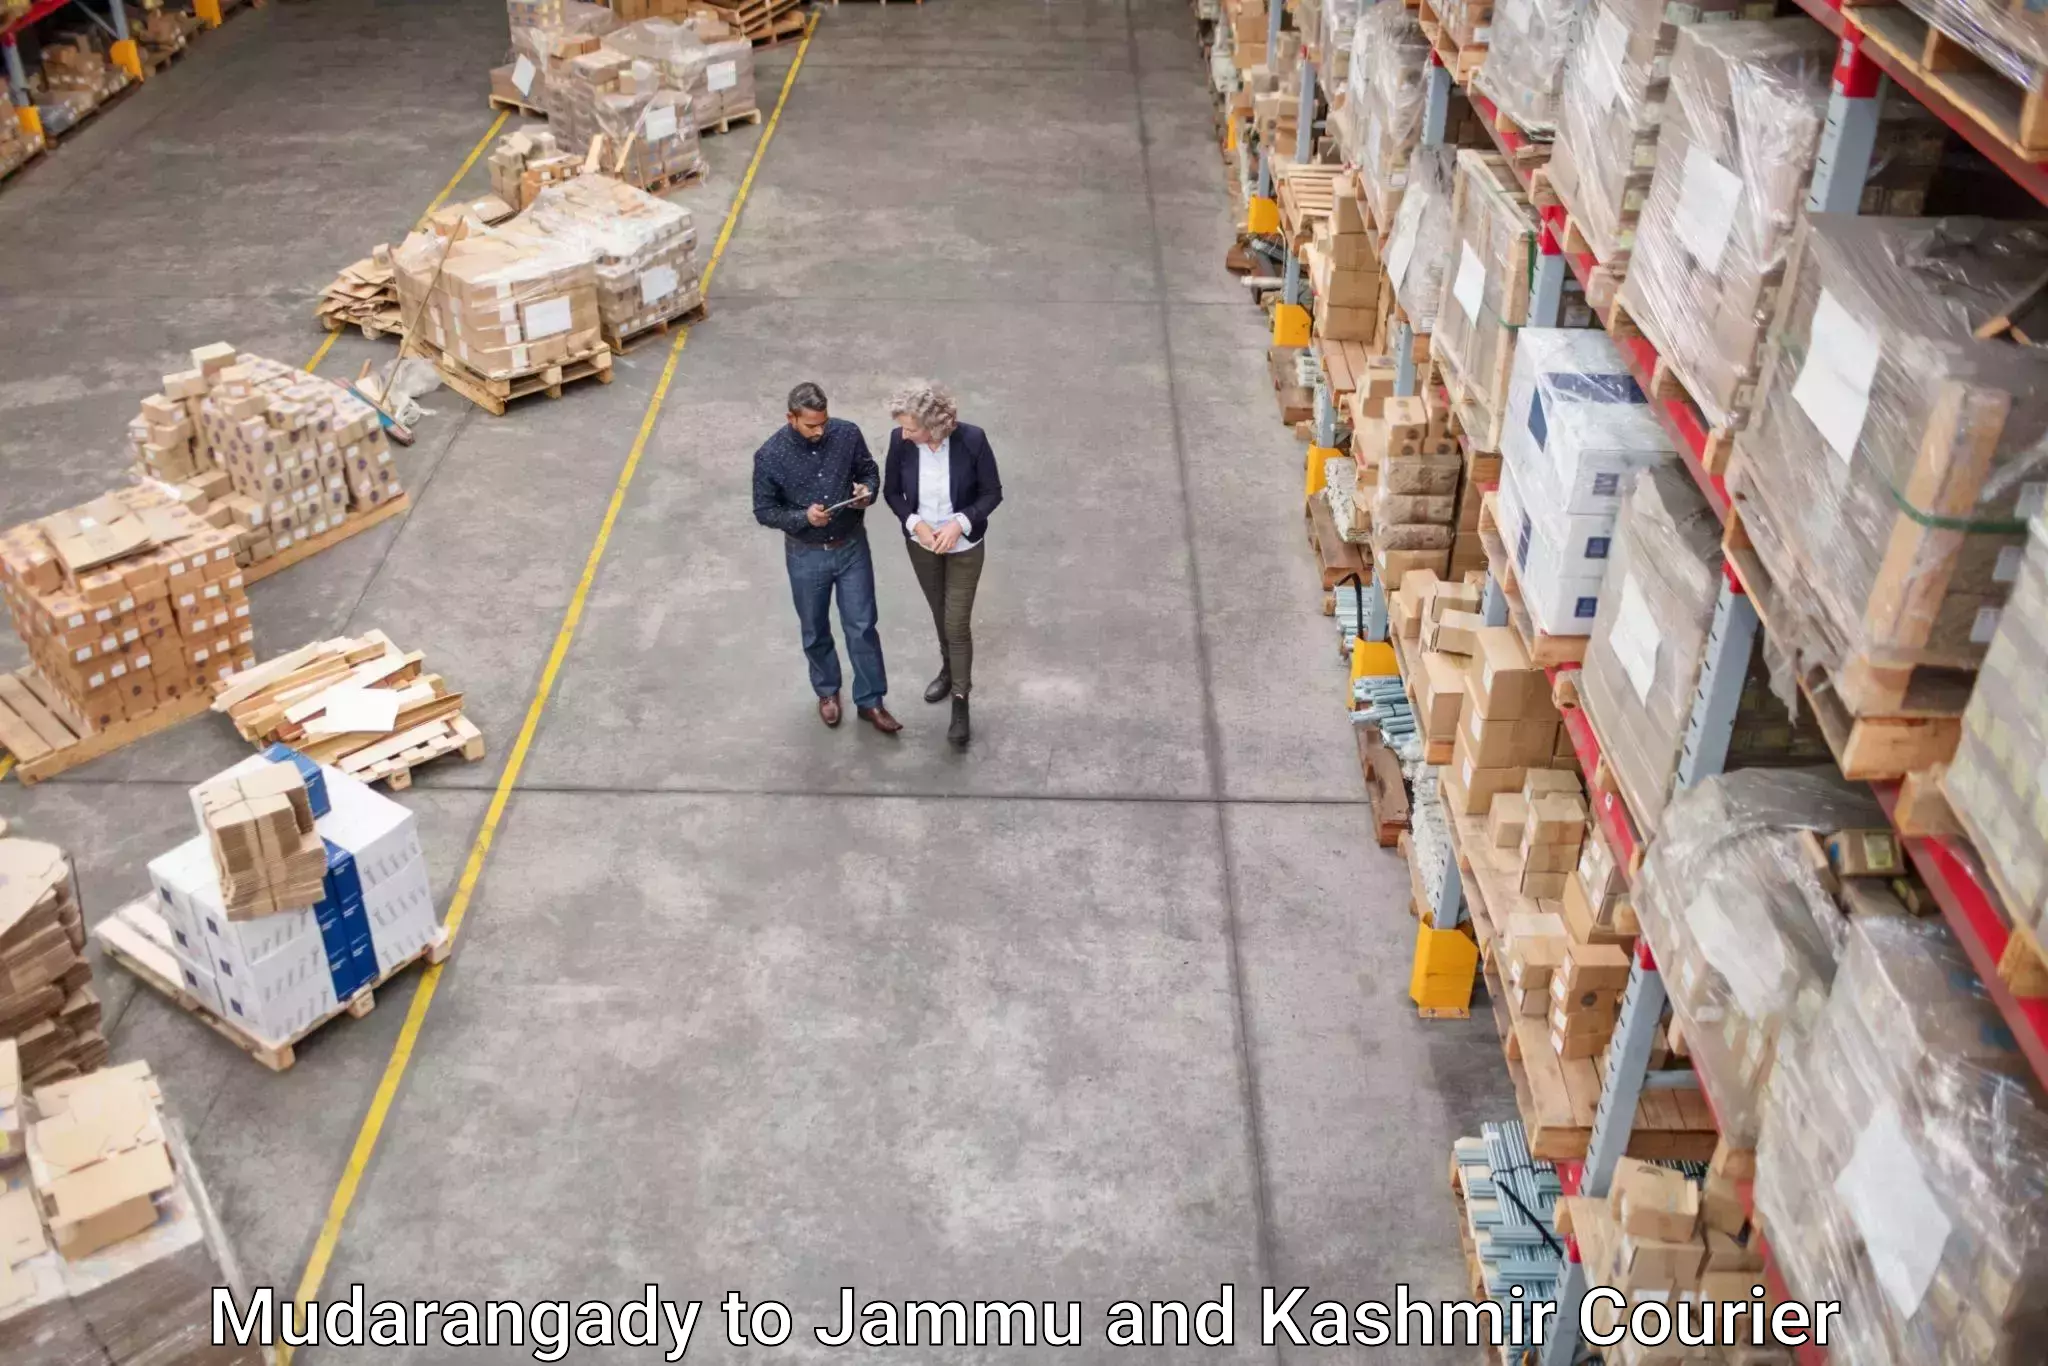 Global logistics network Mudarangady to Jammu and Kashmir